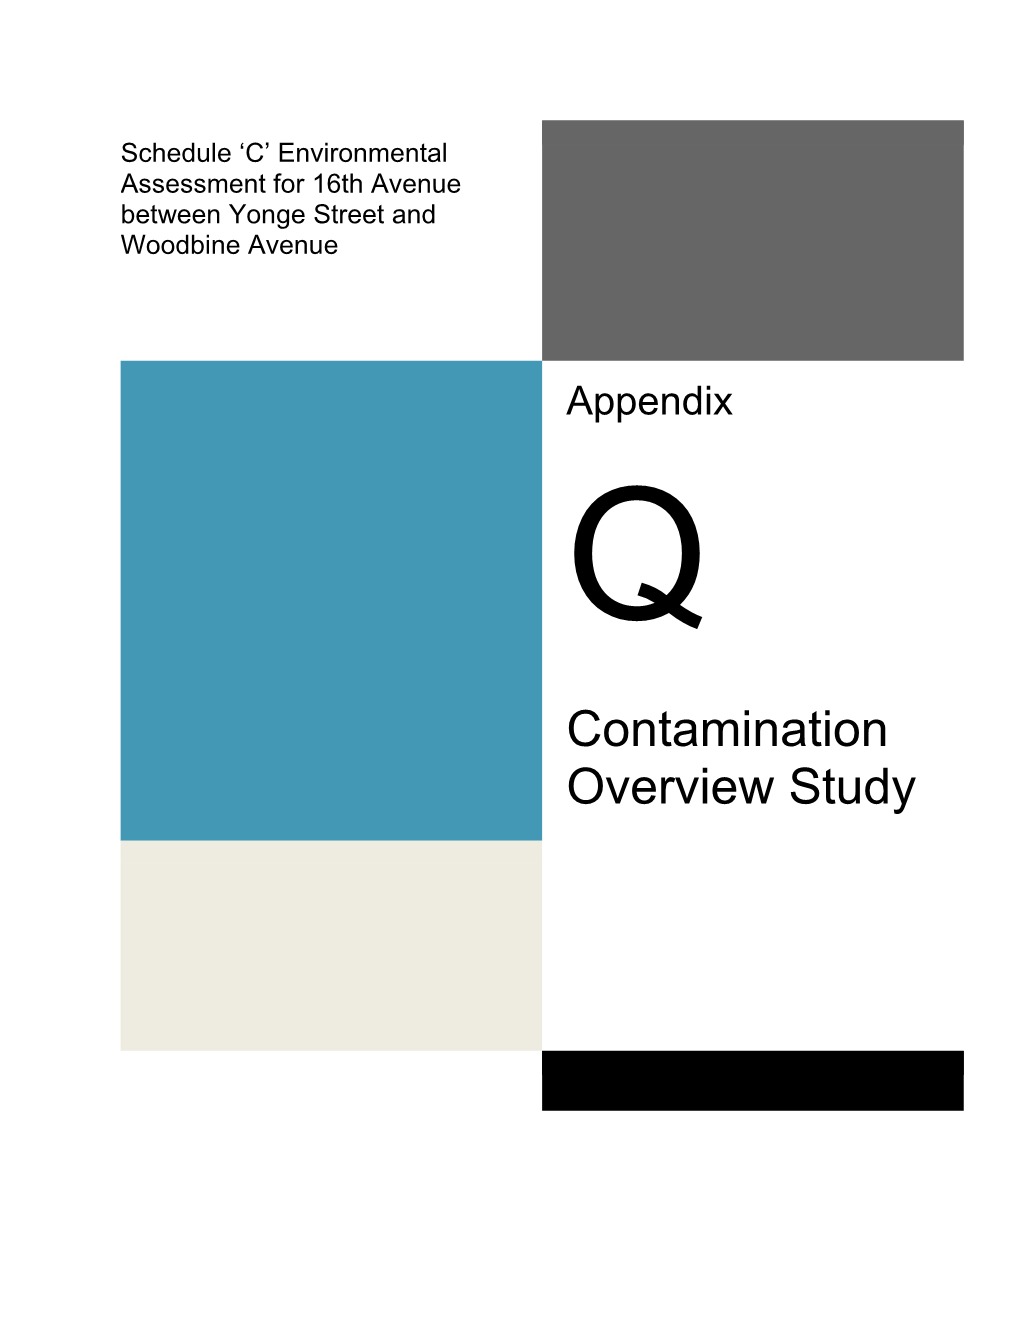 Appendix Q Contamination Overview Study